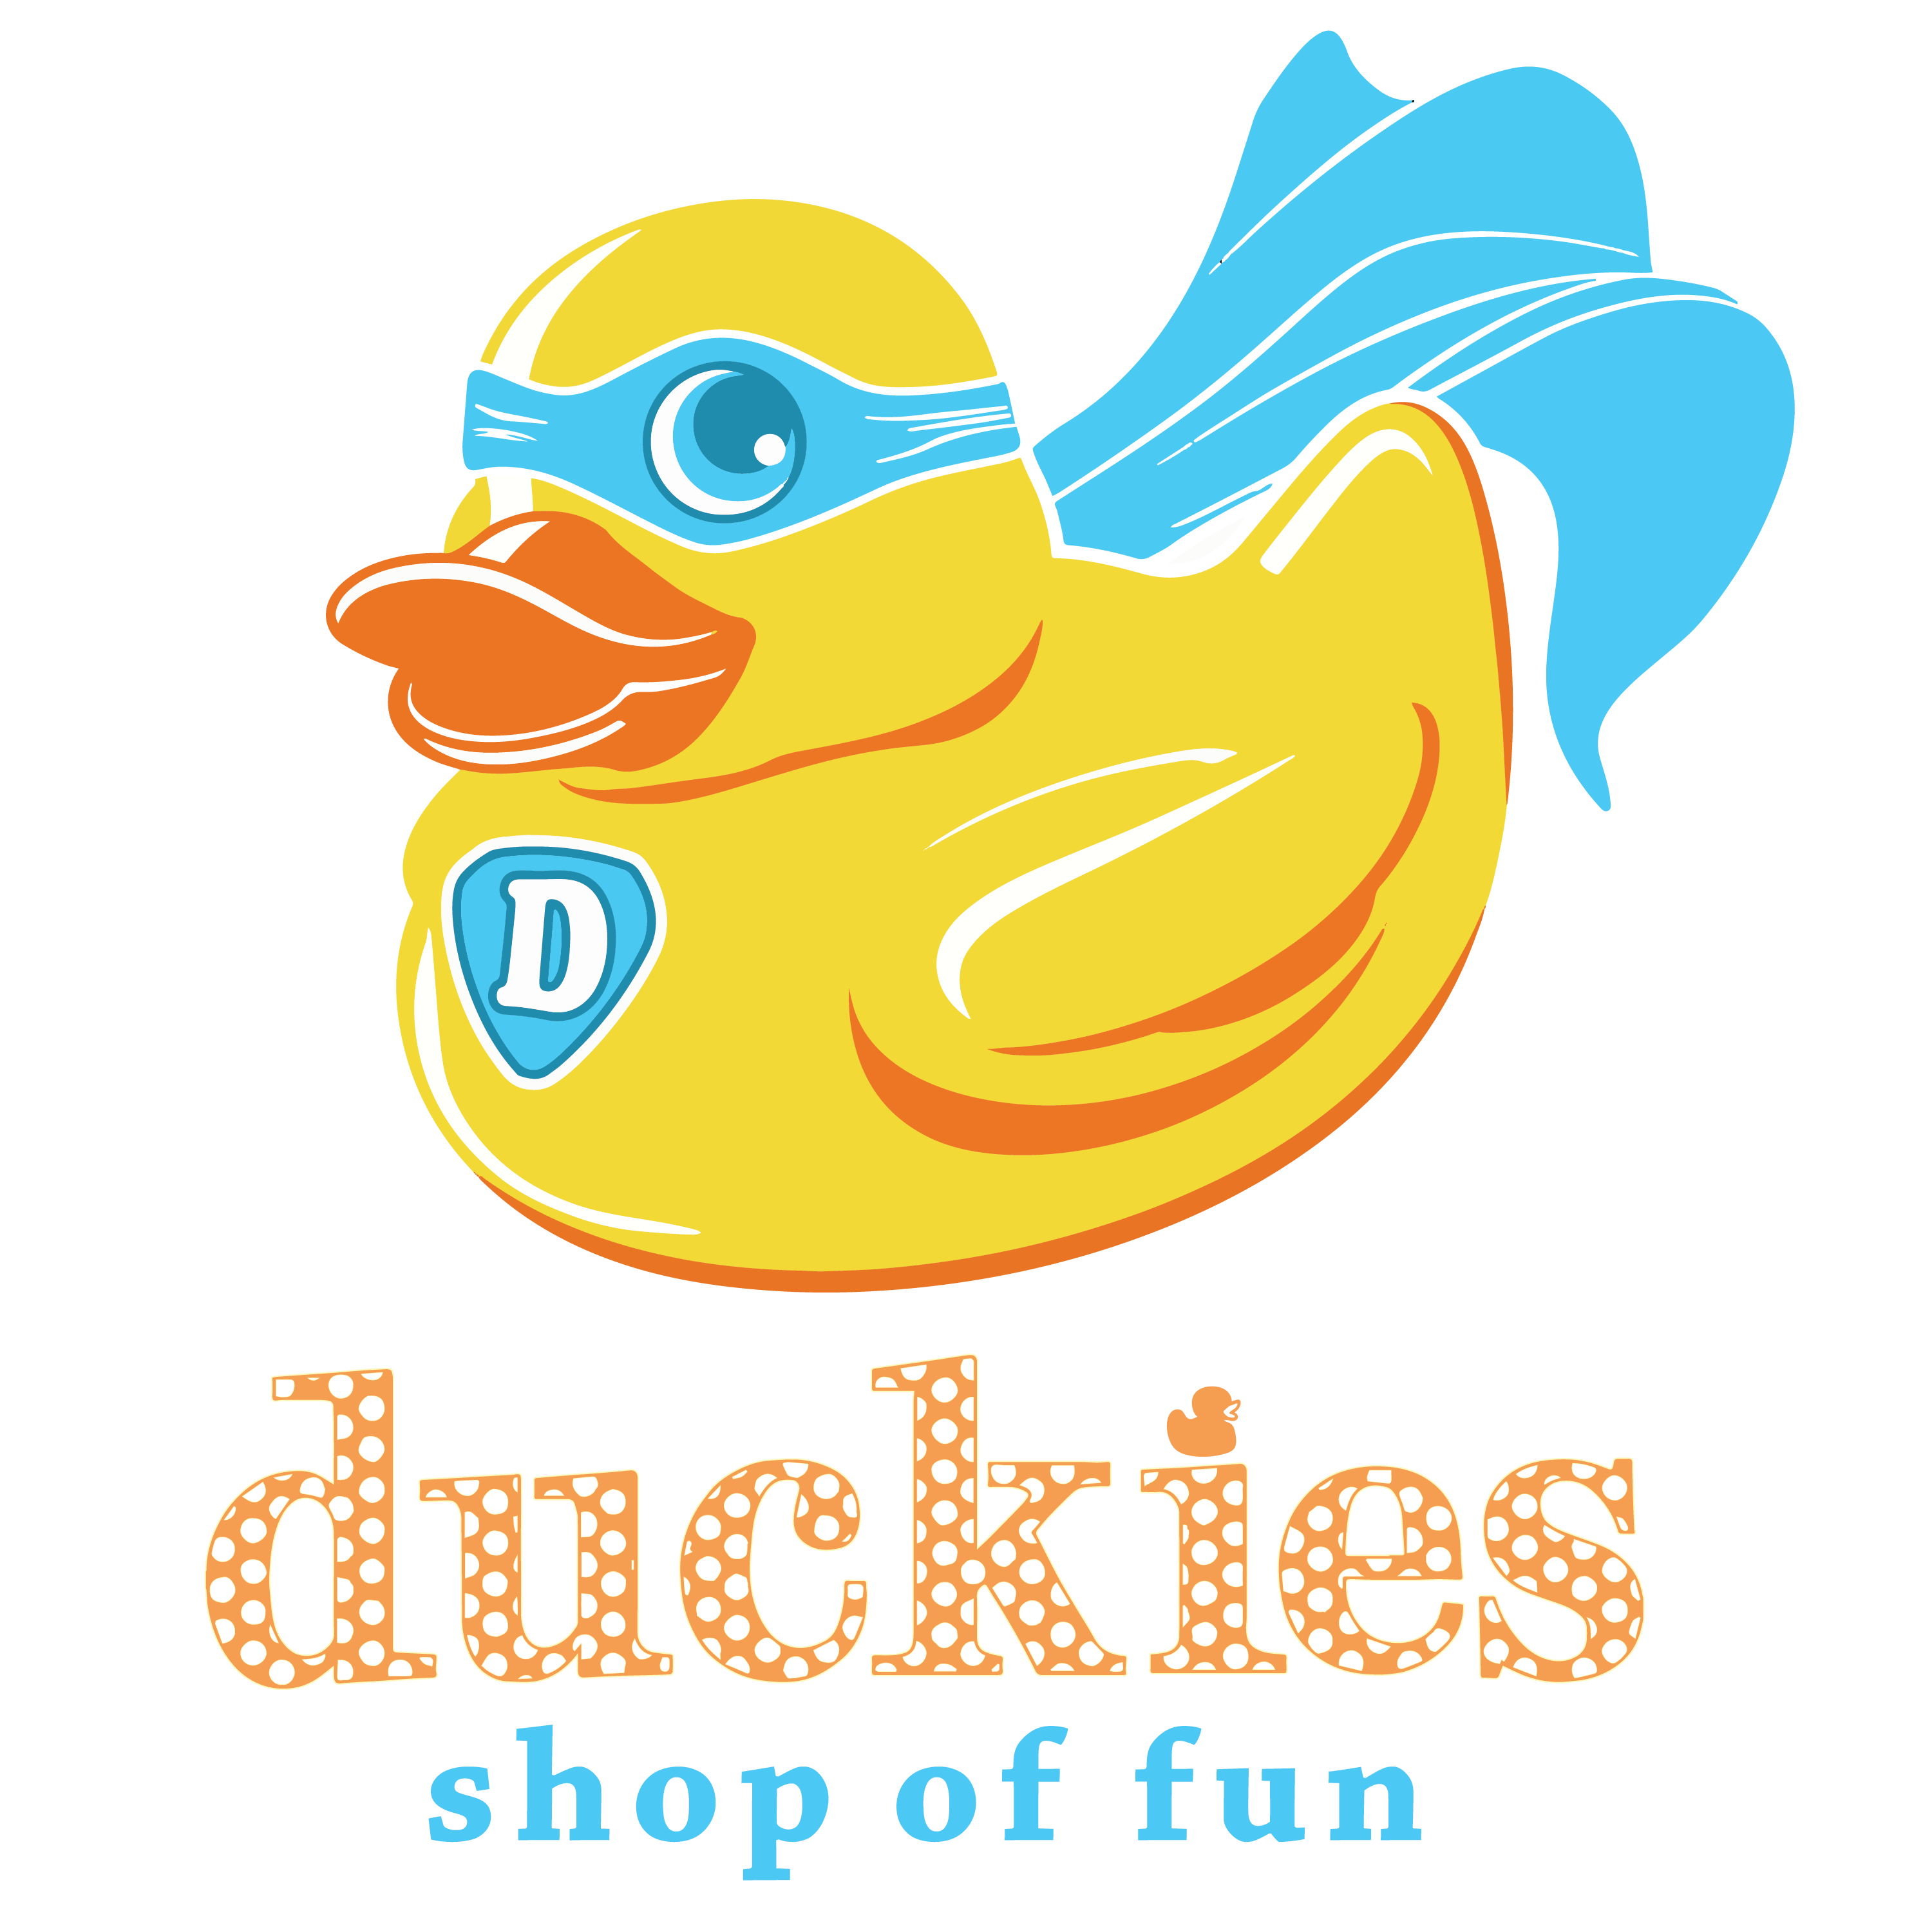 Duckie's Shop of Fun